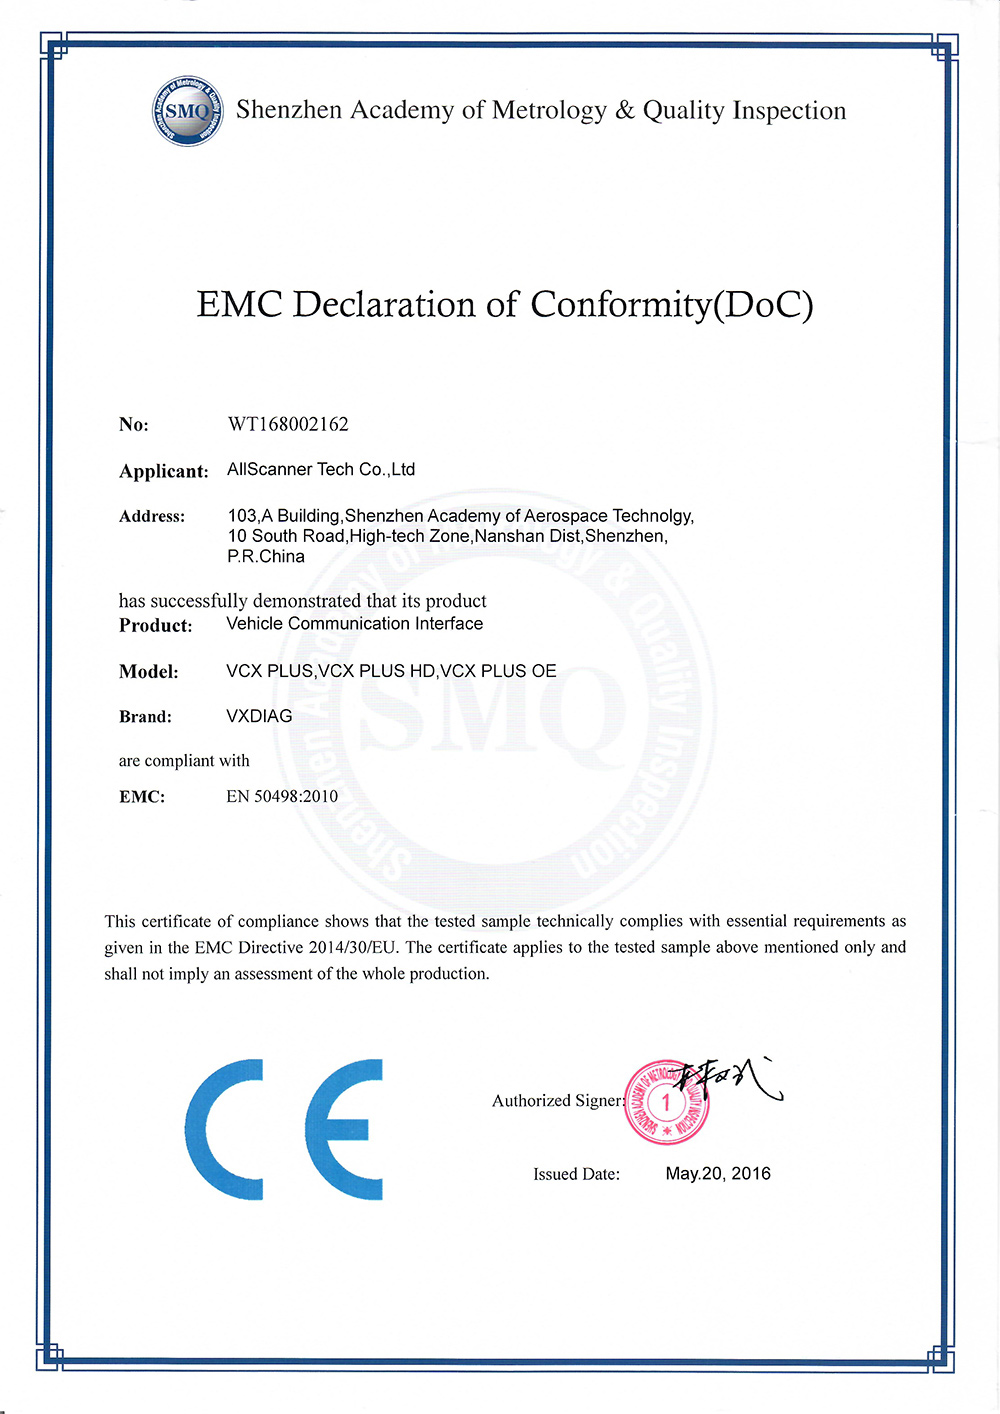 vcx-plus-multi-ce-certificate